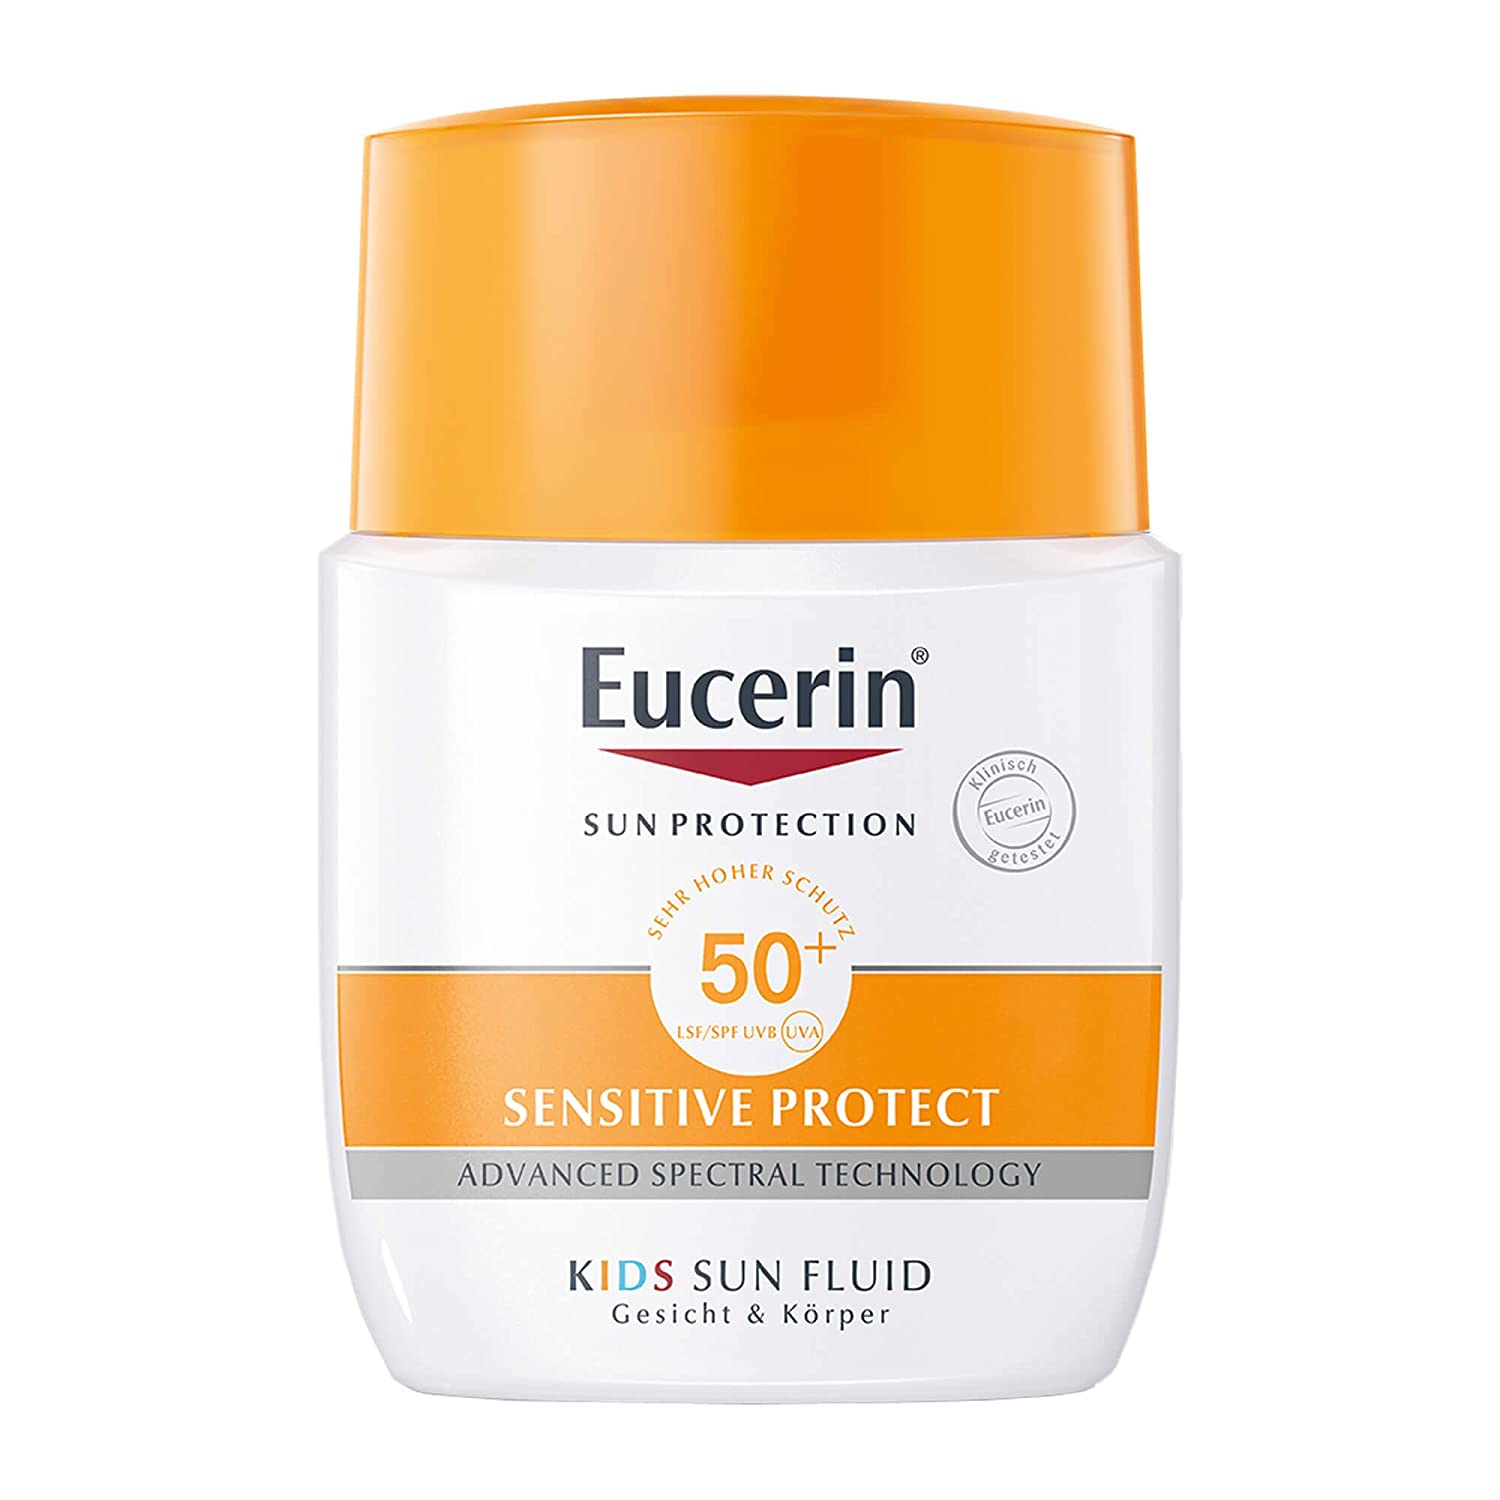 Eucerin Sun Kids Fluid SPF 50+ for Travel, 50 ml